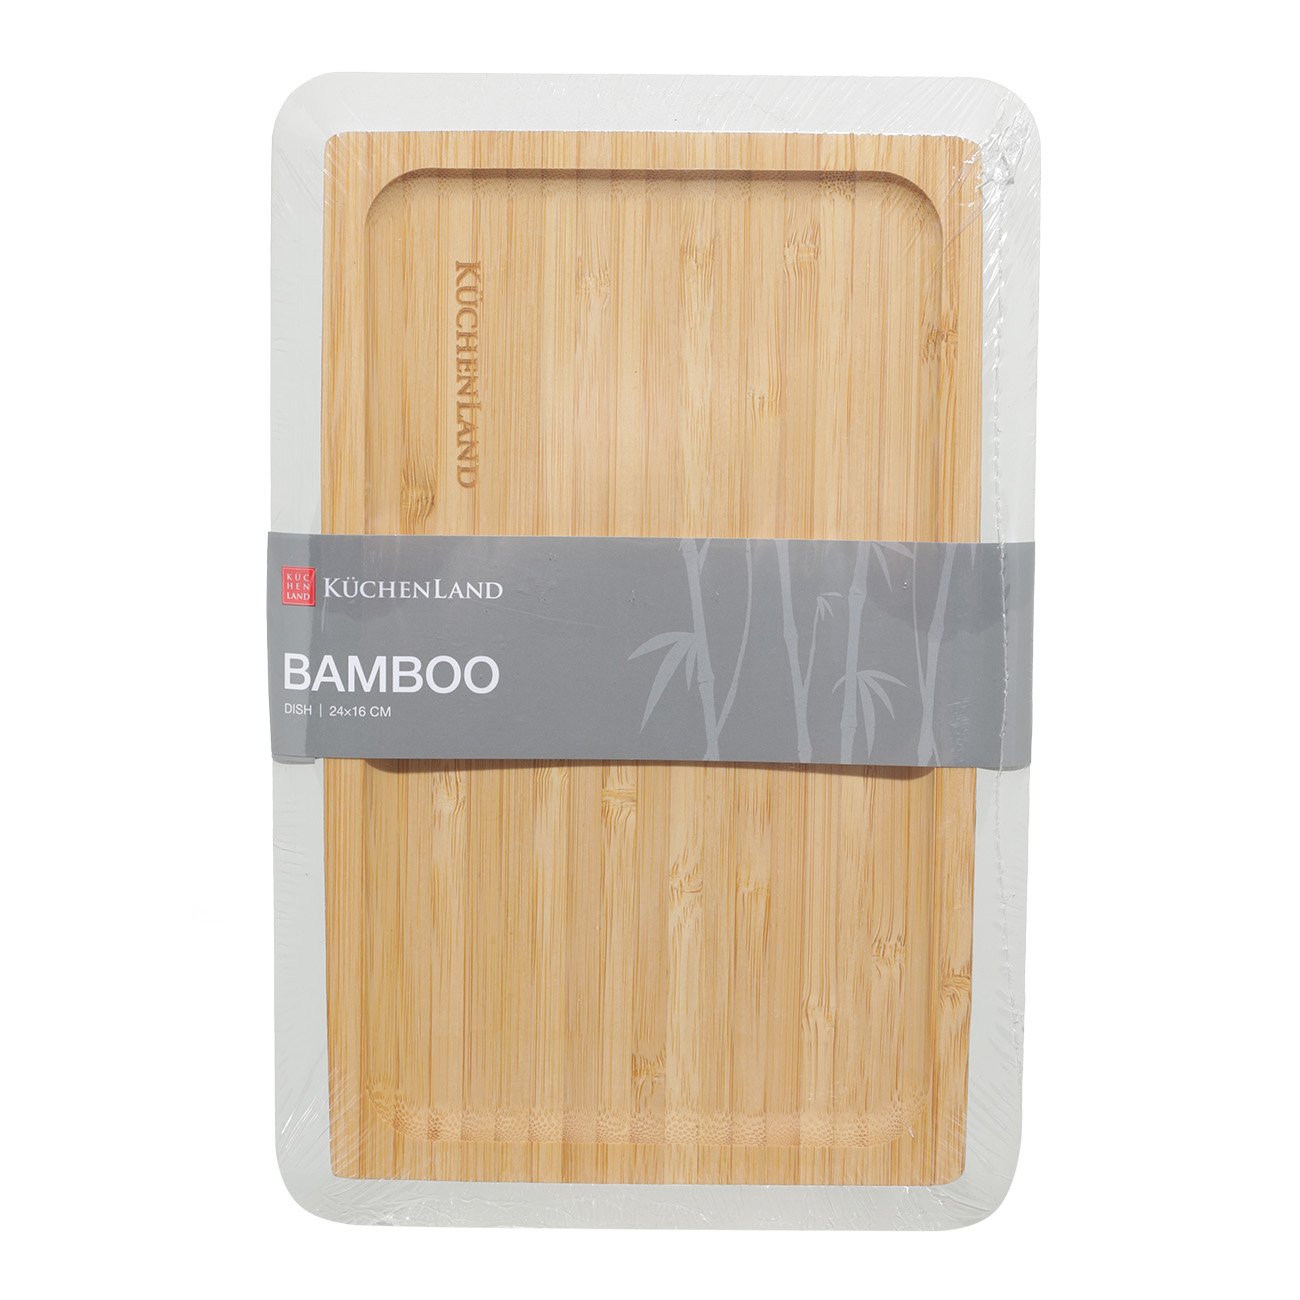 Dish, 24x16 cm, bamboo, rectangular, grey edging, Bamboo soft изображение № 2